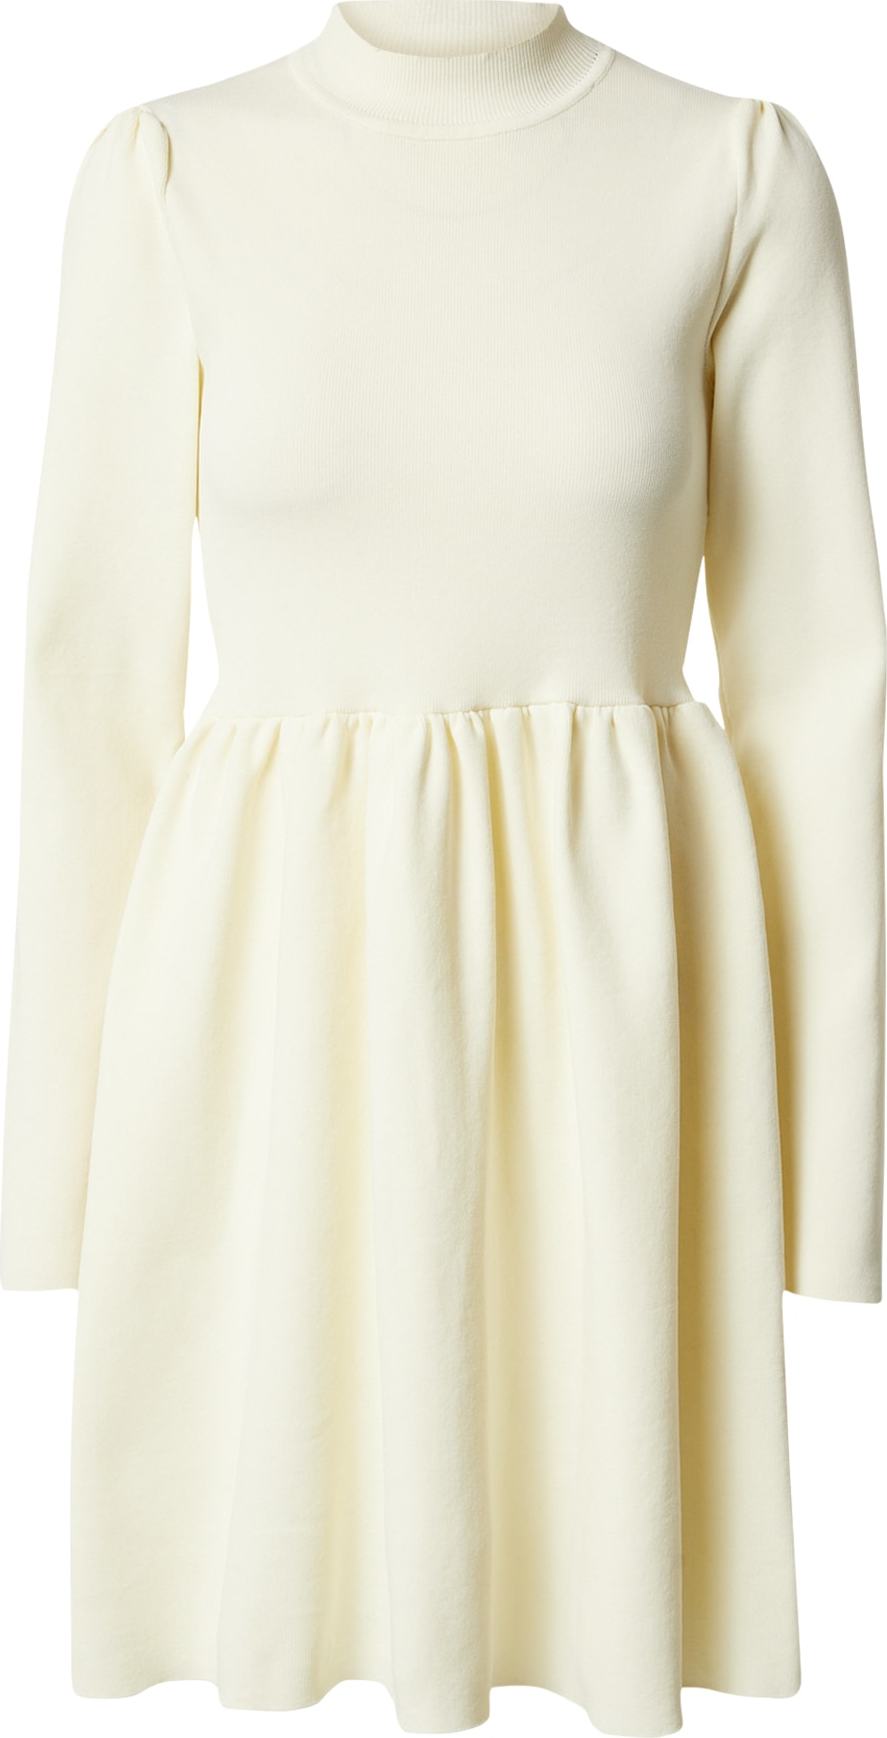 Úpletové šaty 'Kalea' EDITED barva bílé vlny